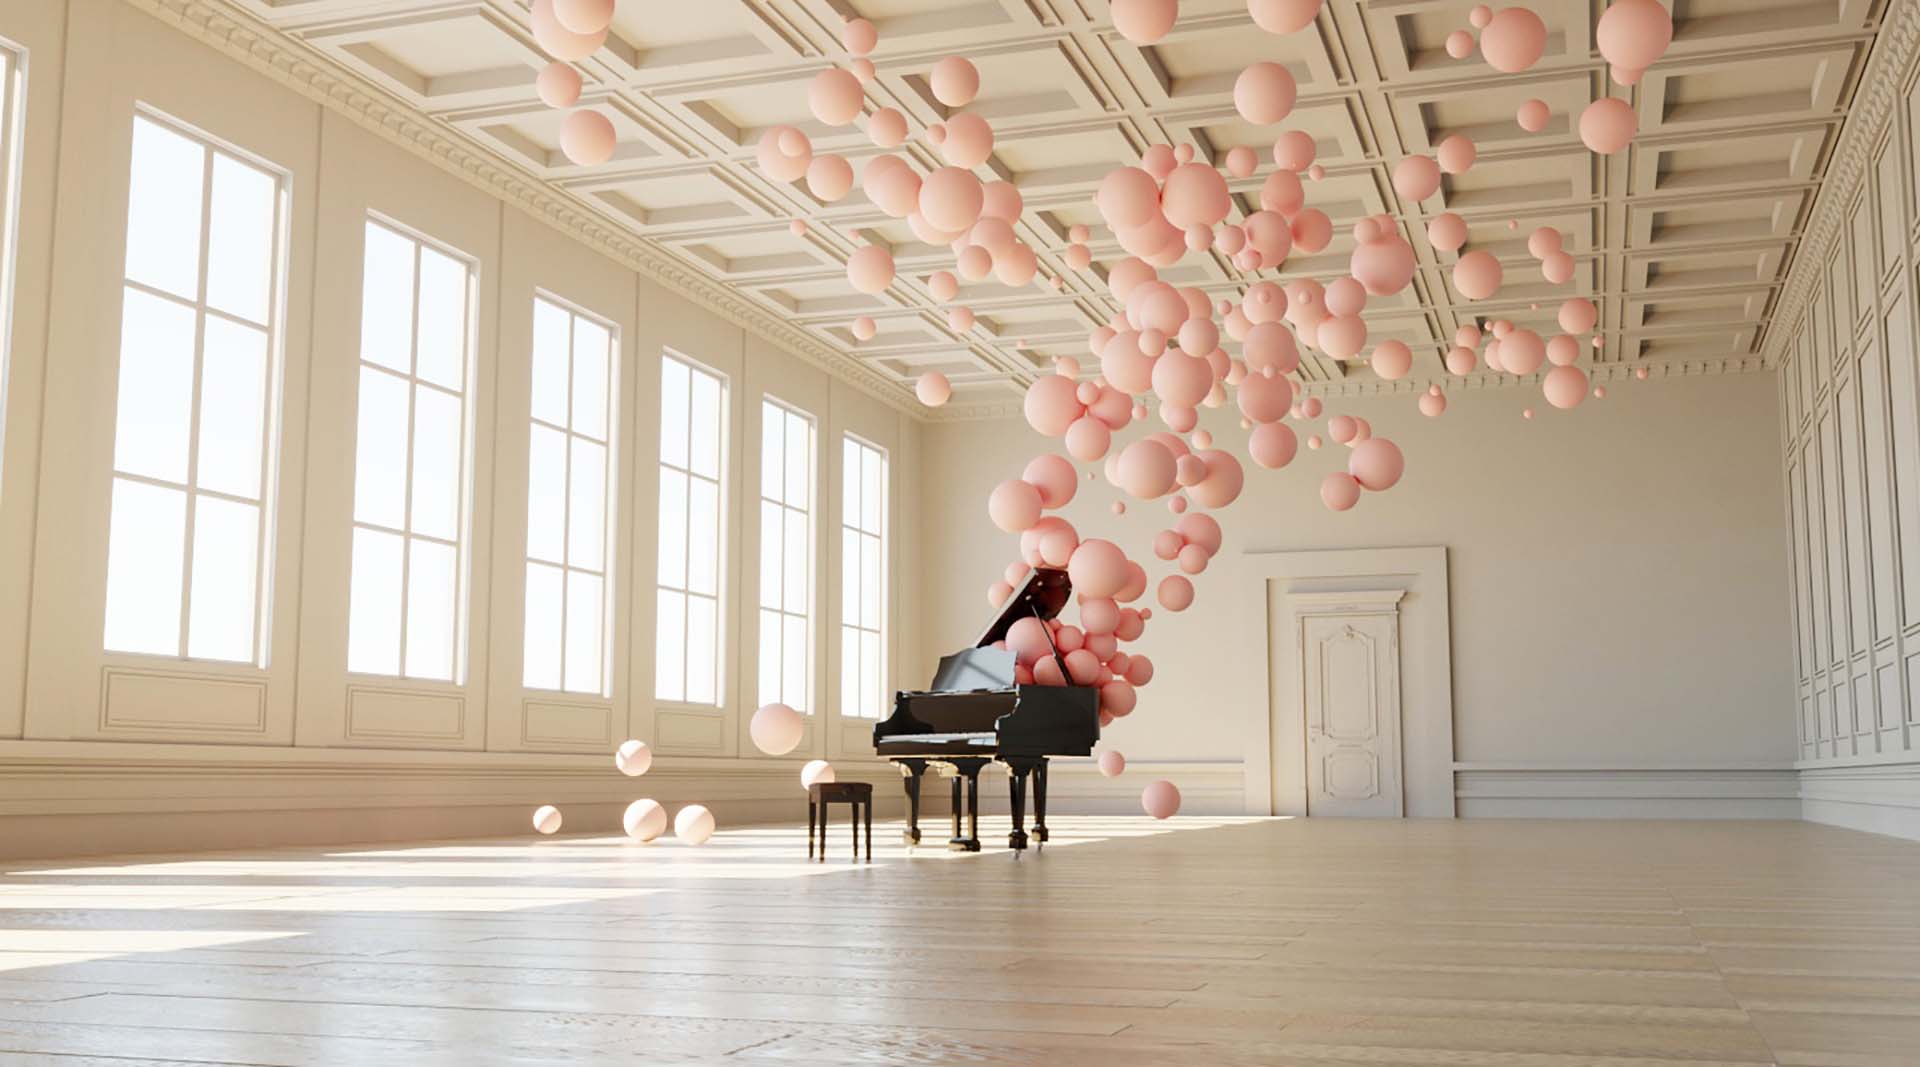 design-motion-3d-photography-octane-redshift-corona-art-visual-animation-render-style-graphic-piano-music-beauty-digital-balloon-art-pink-interiordesign-federicopicci